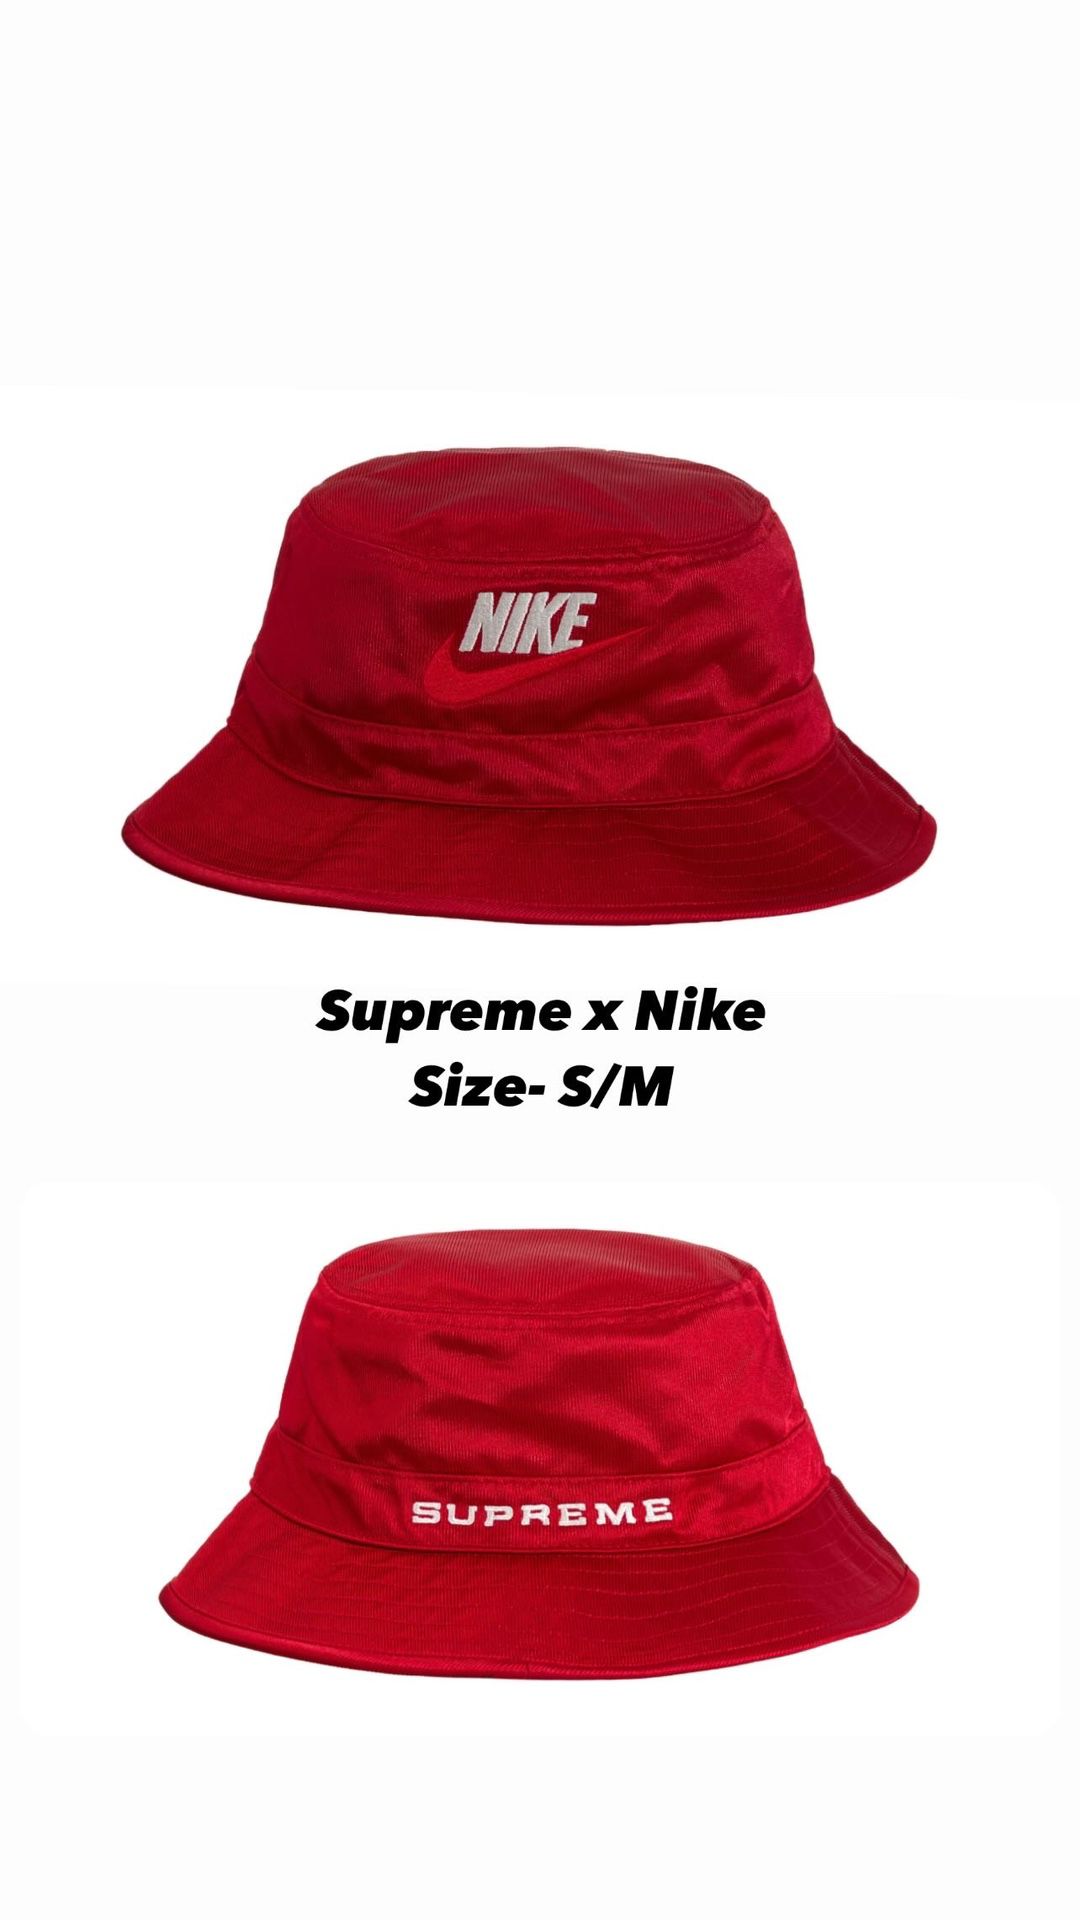 Nike x Supreme Dazzle Crusher Red - Size S/M  